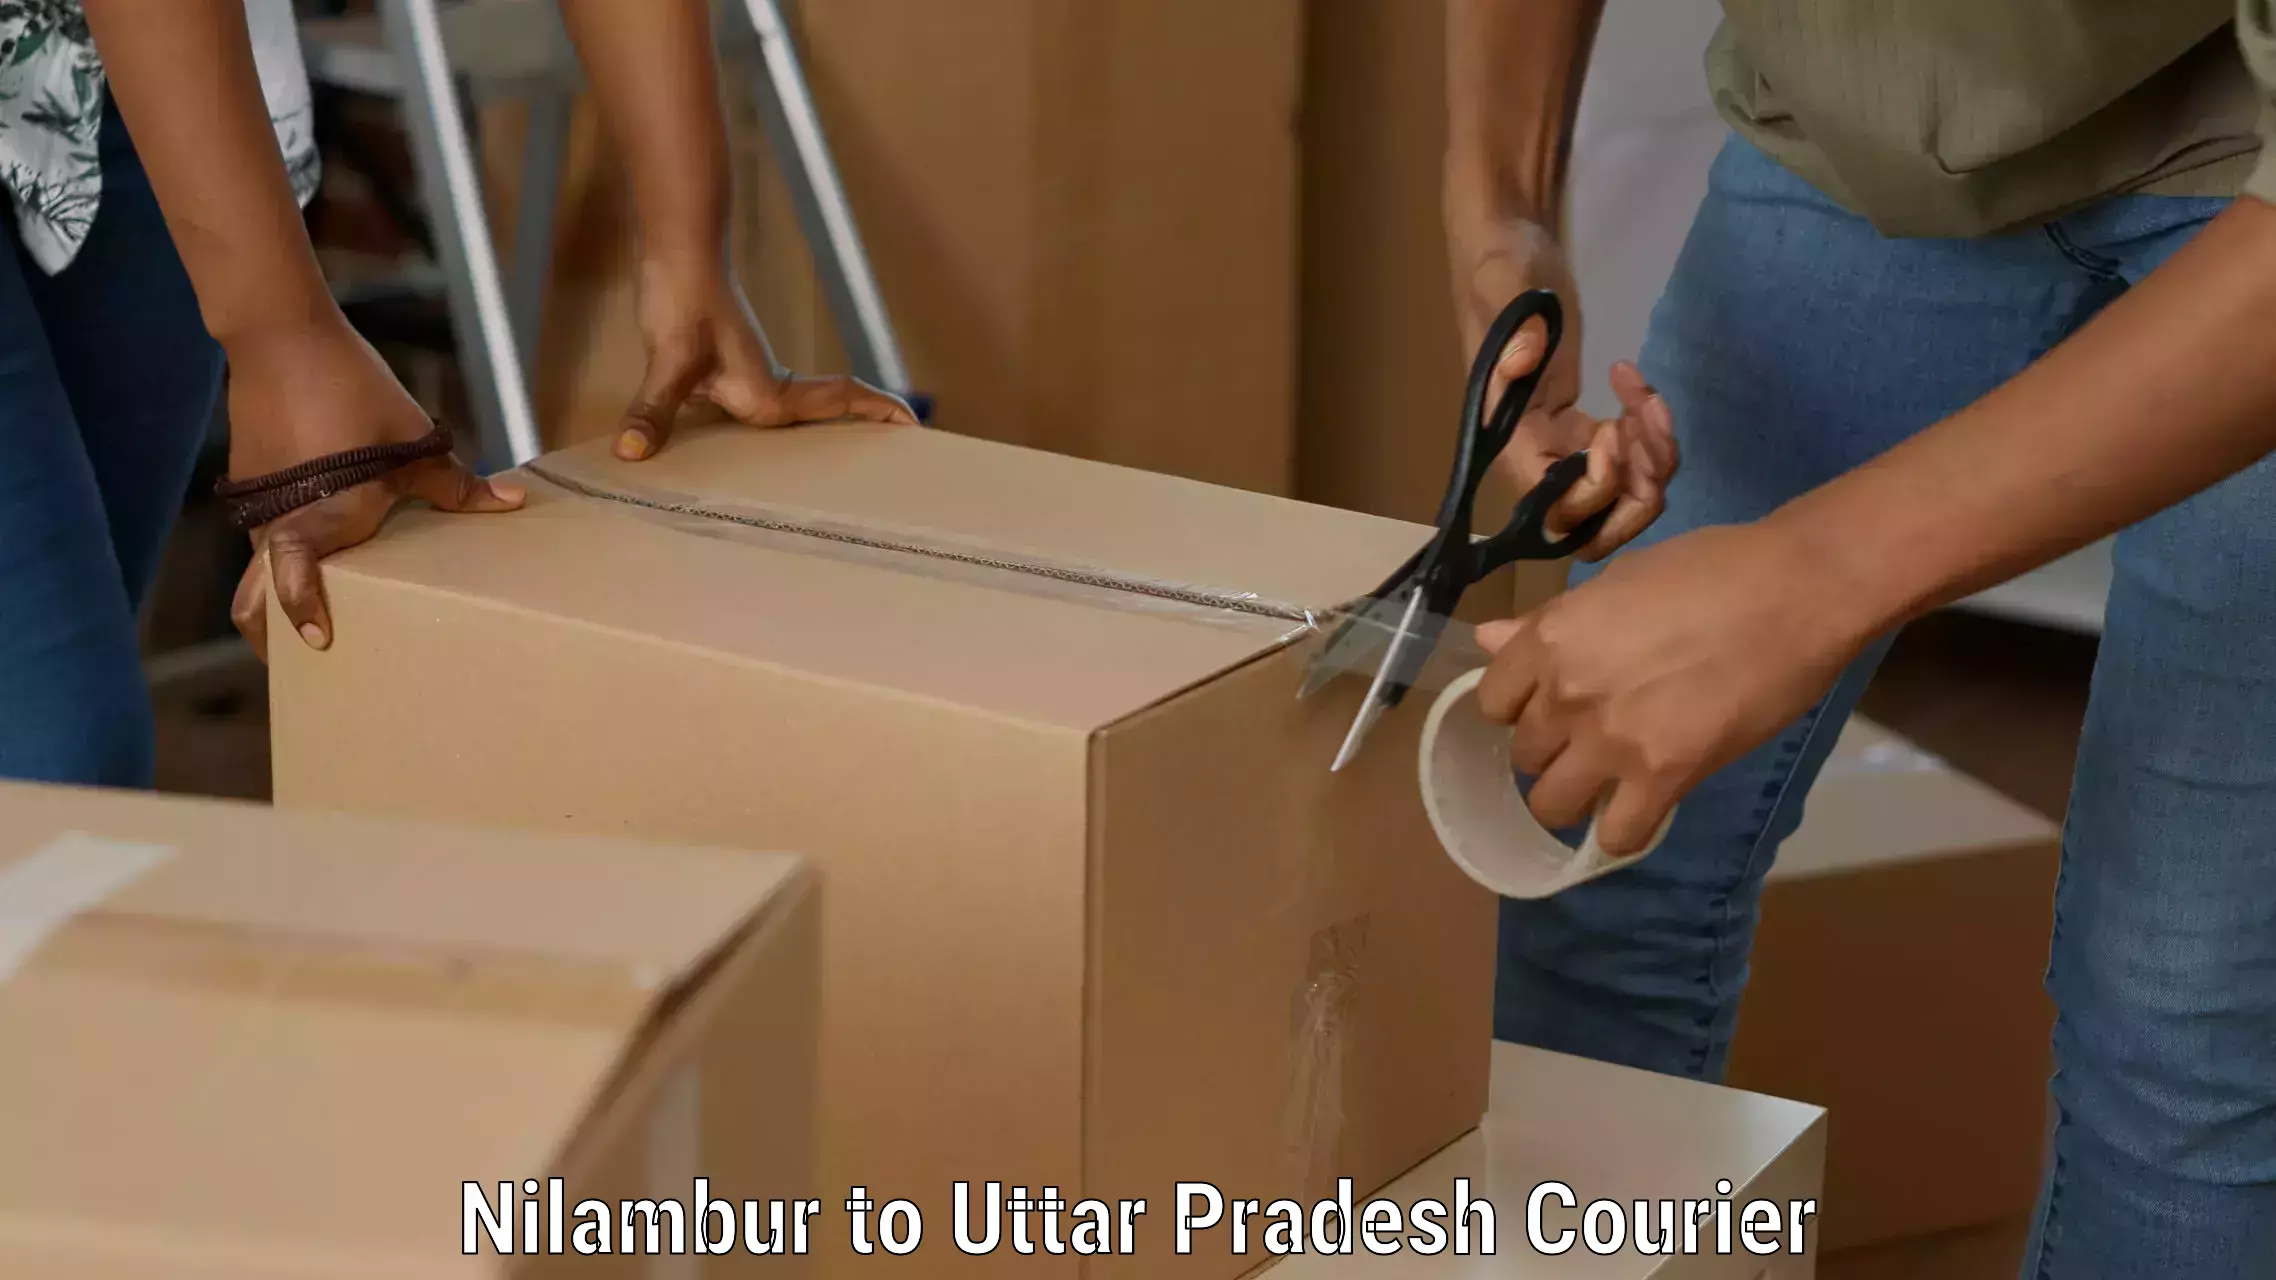 Professional courier handling Nilambur to Gopiganj